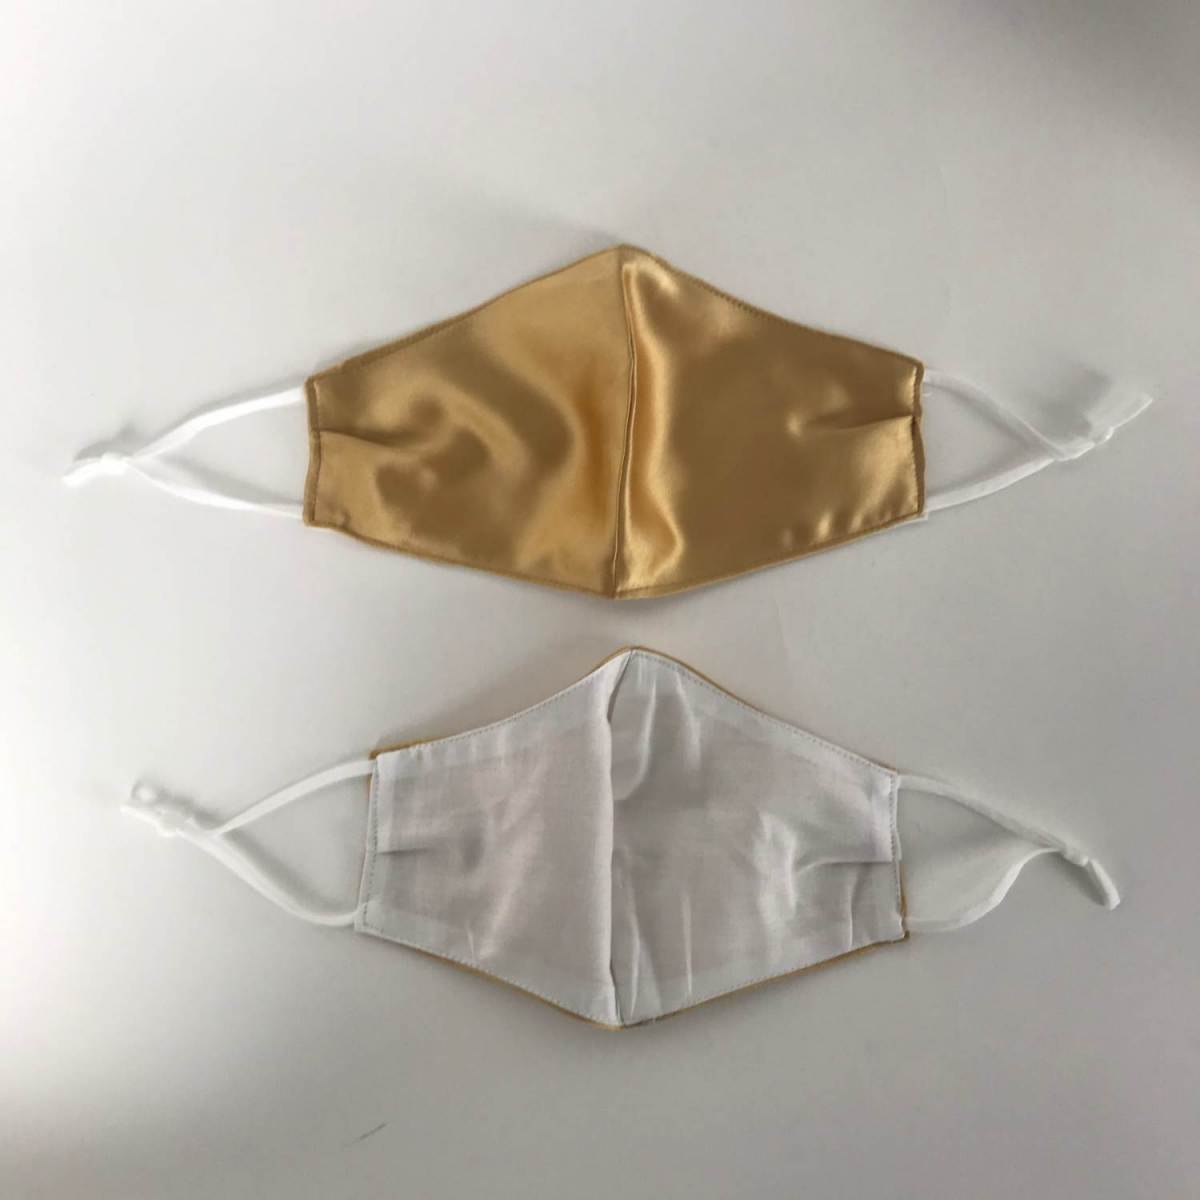 B1764 30 Gold FM mens ties facemasks con murphys menswear cork scaled - - Con Murphys Menswear